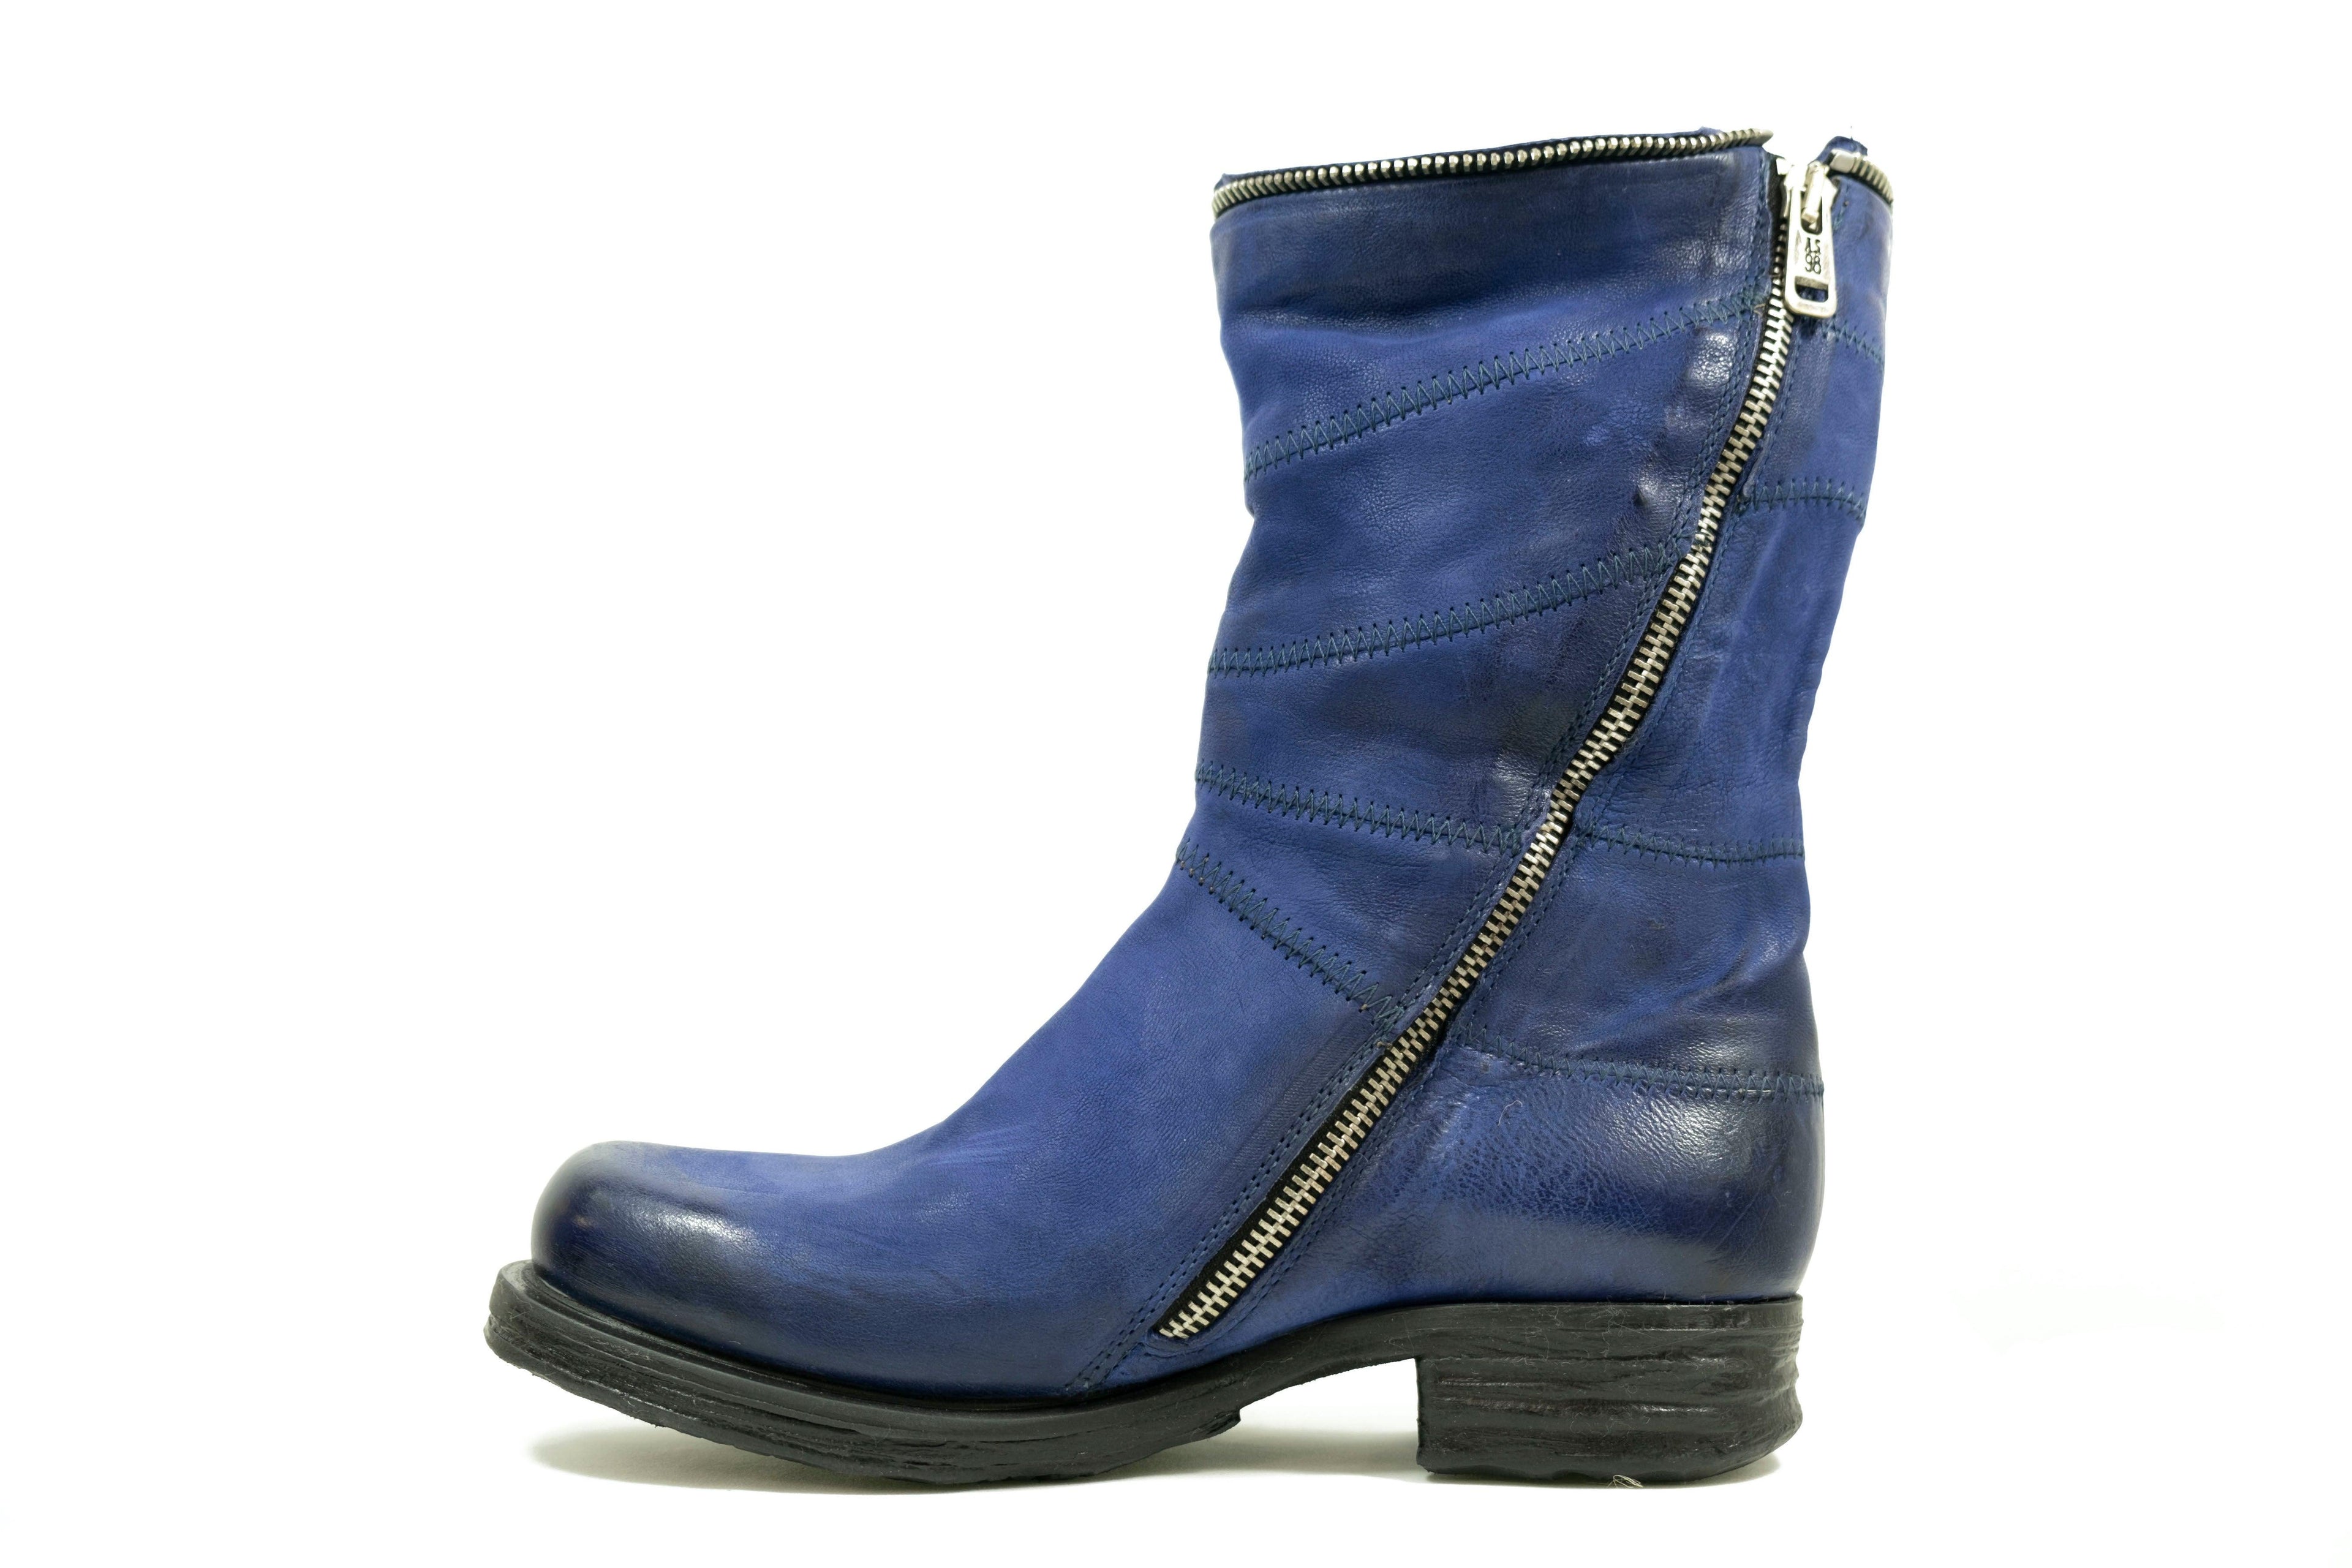 Matera - A.S. 98 - Fall Boot